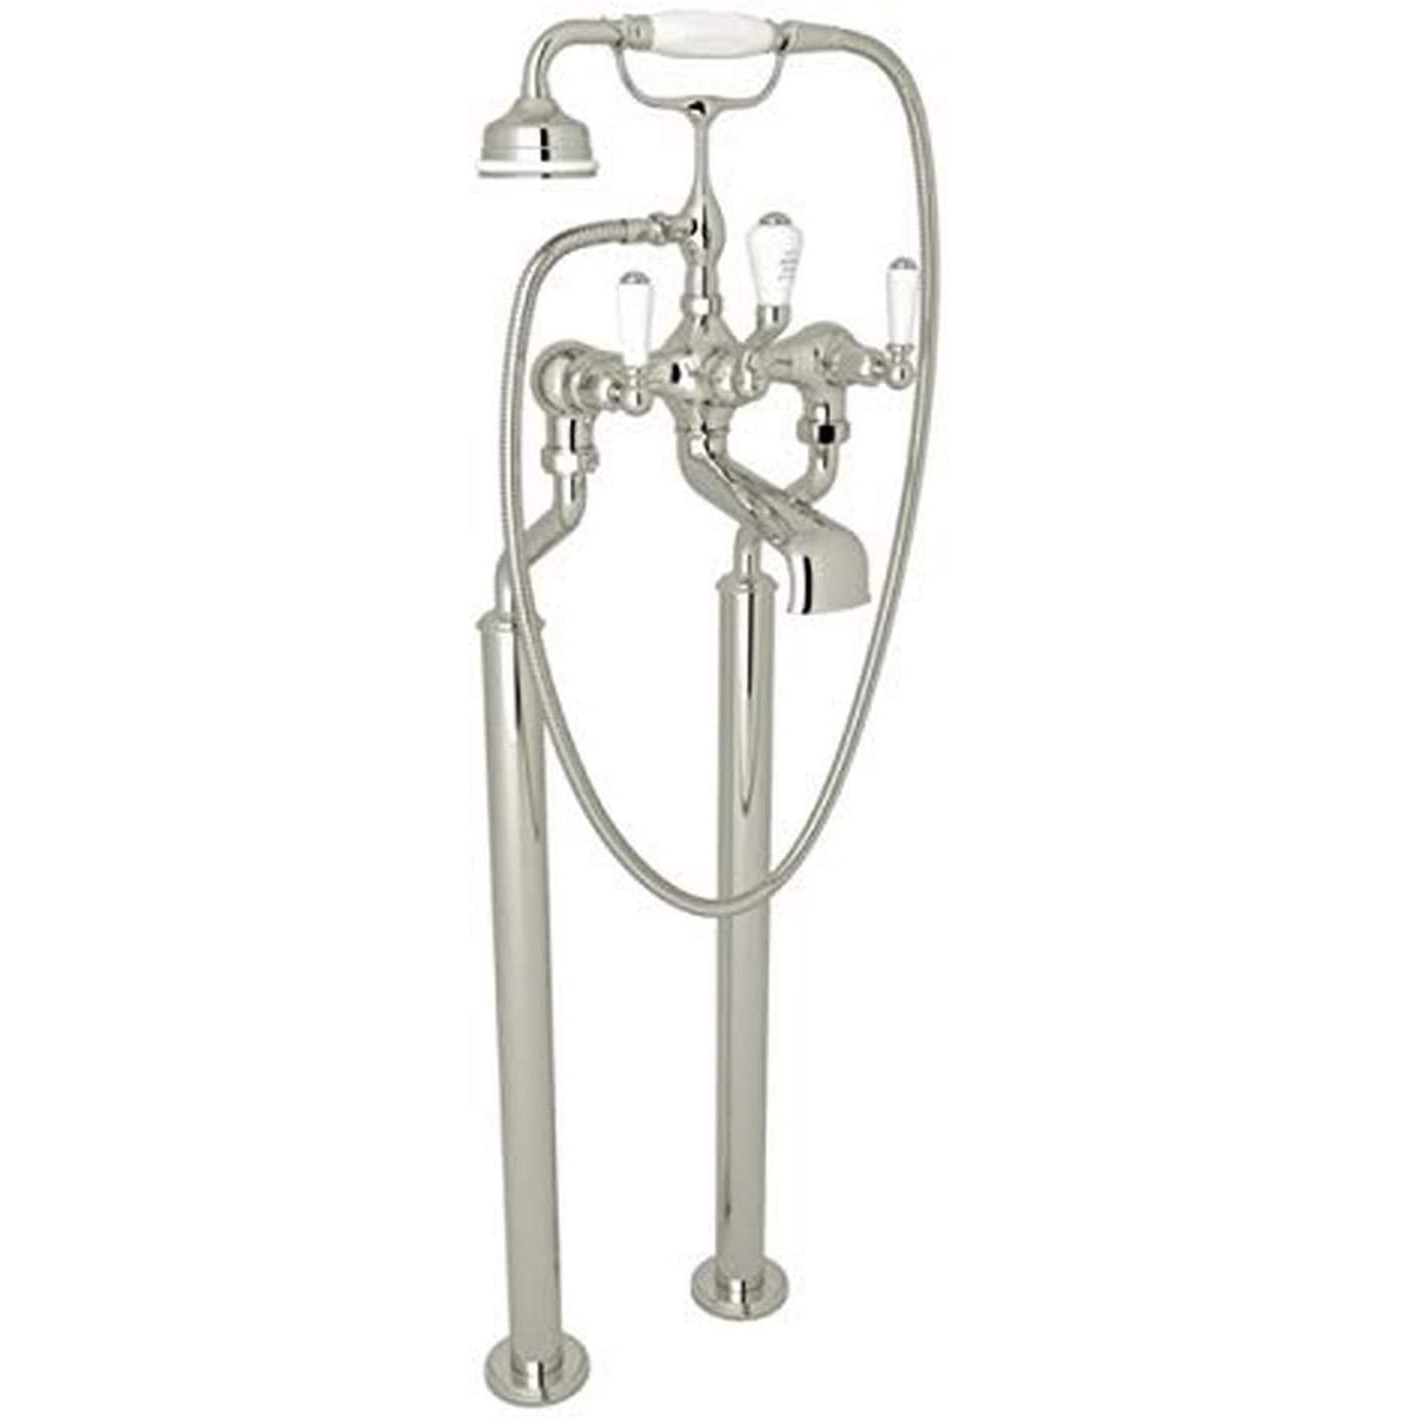 Perrin & Rowe Edwardian Floor Mounted Tub Faucet Plus Hand Shower In Polished Nickel